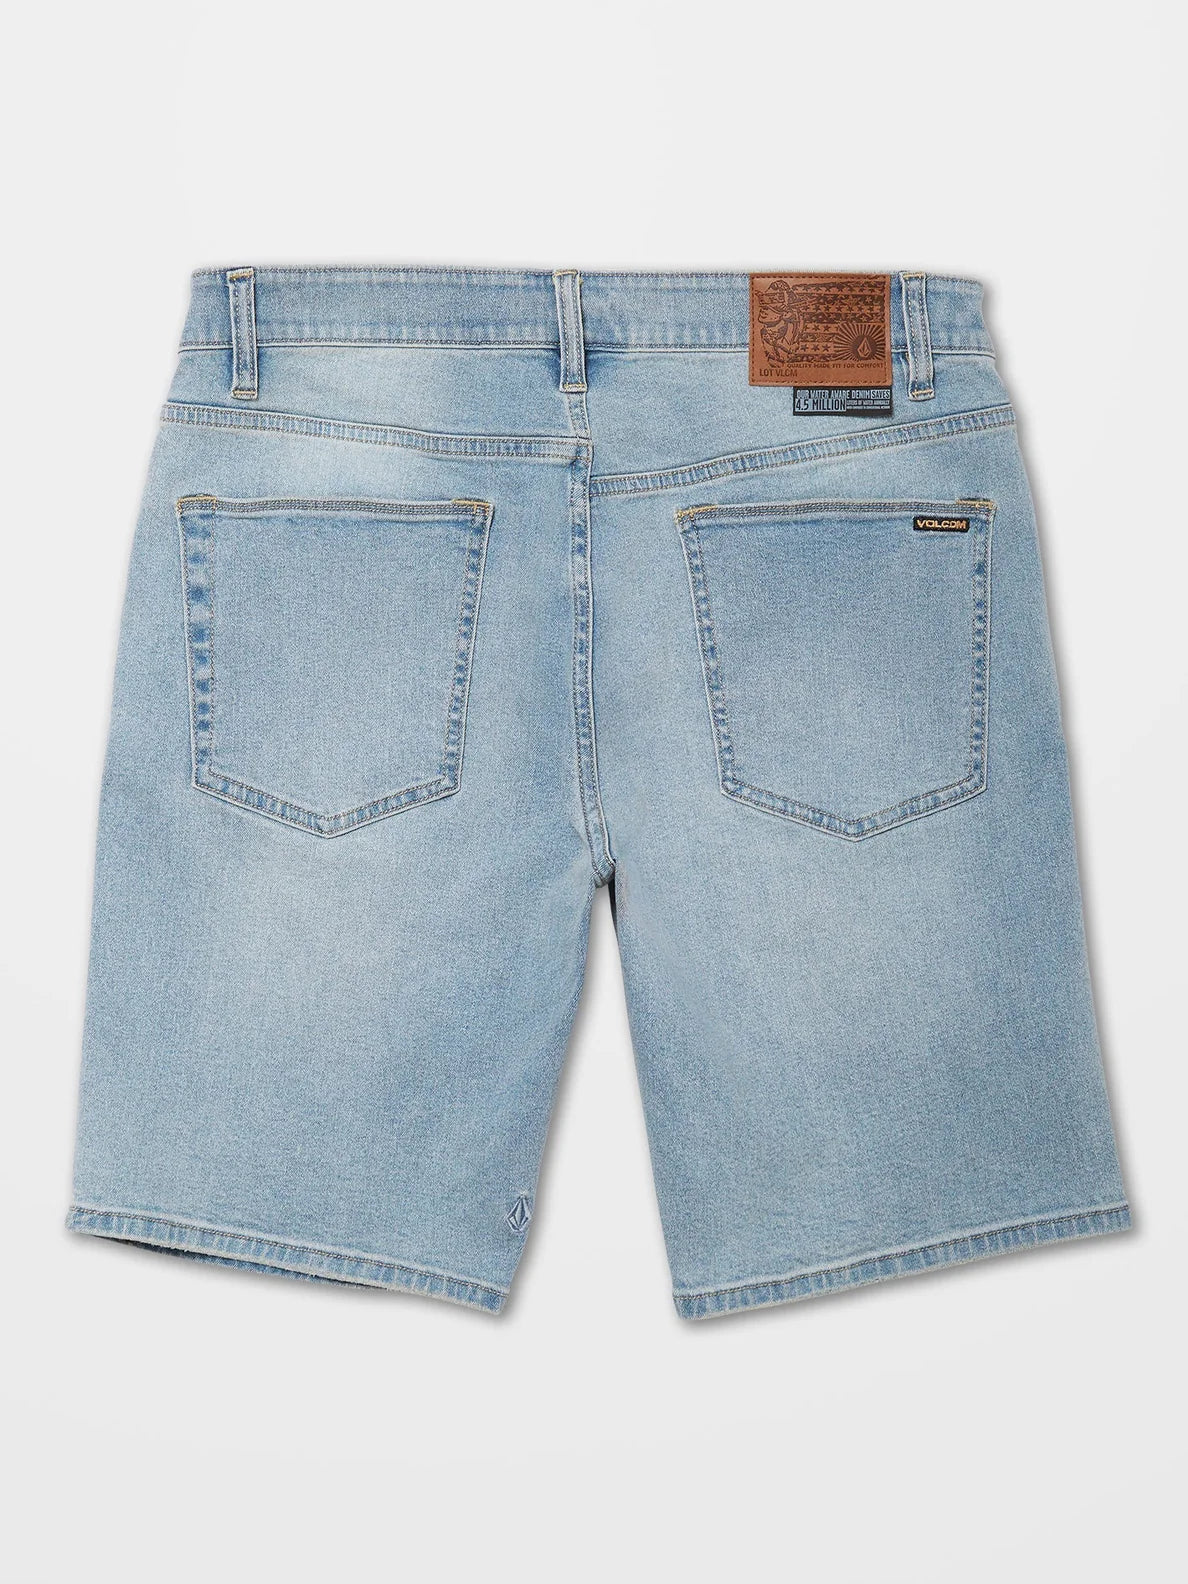 Volcom Solver Denim Shorts – Worker Indigo Vintage